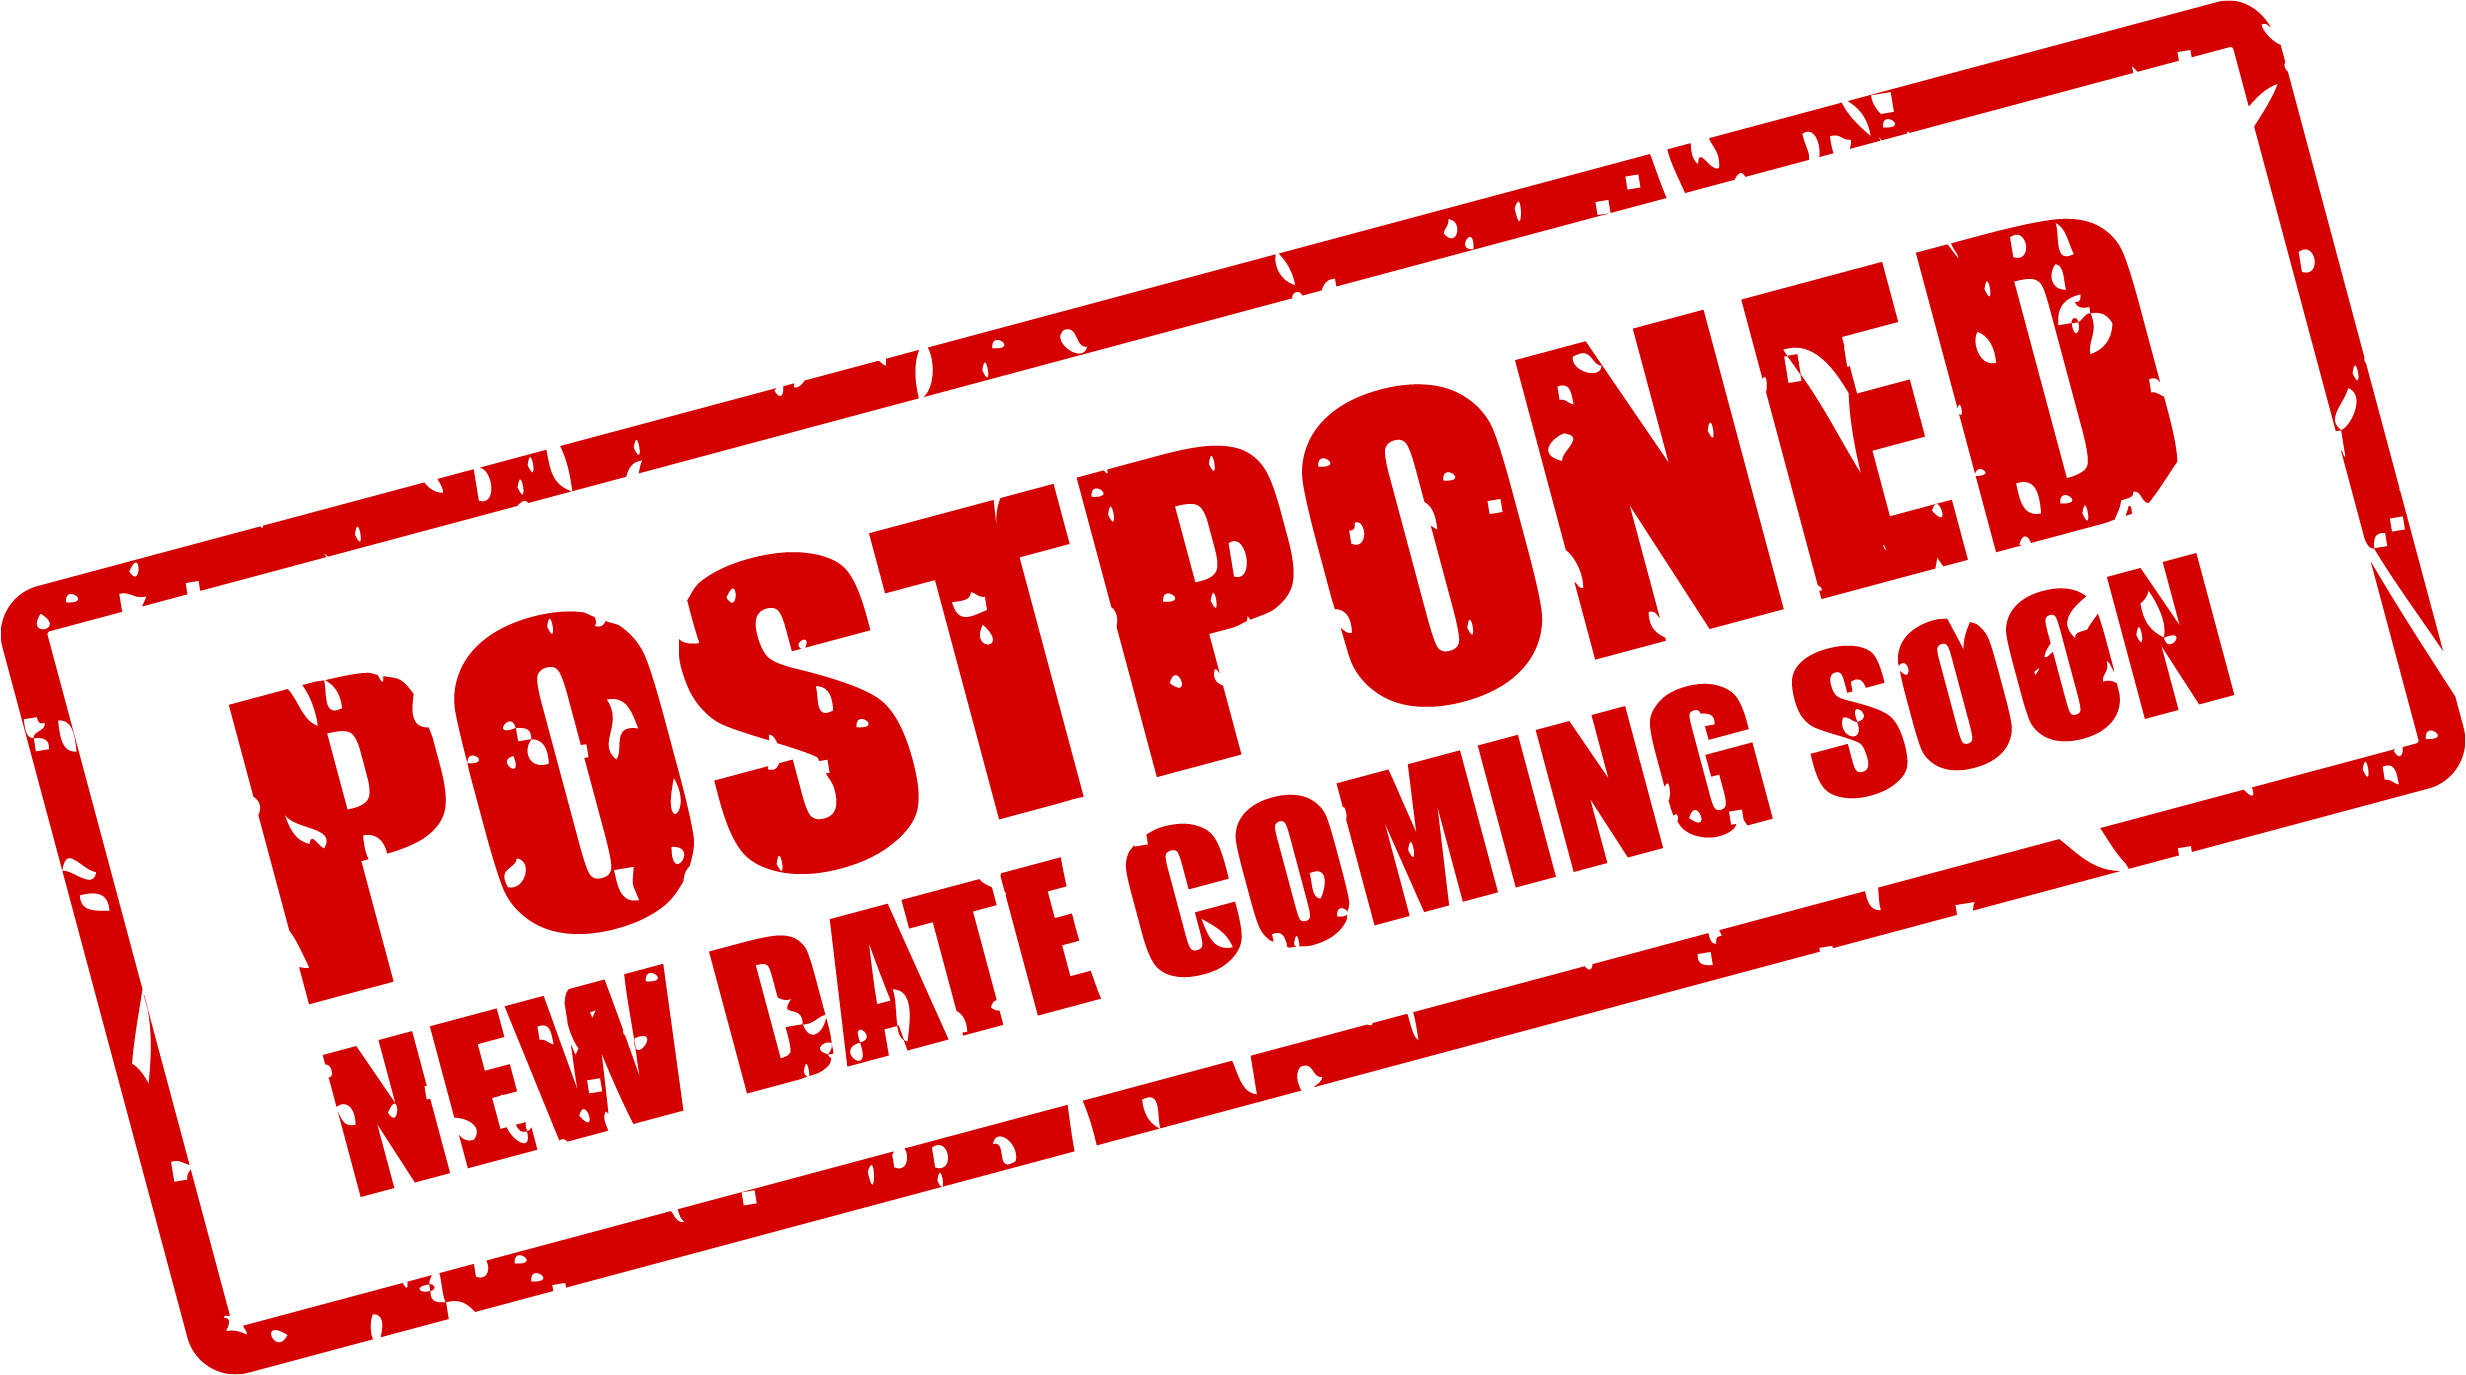 Postponed Sign.jpg